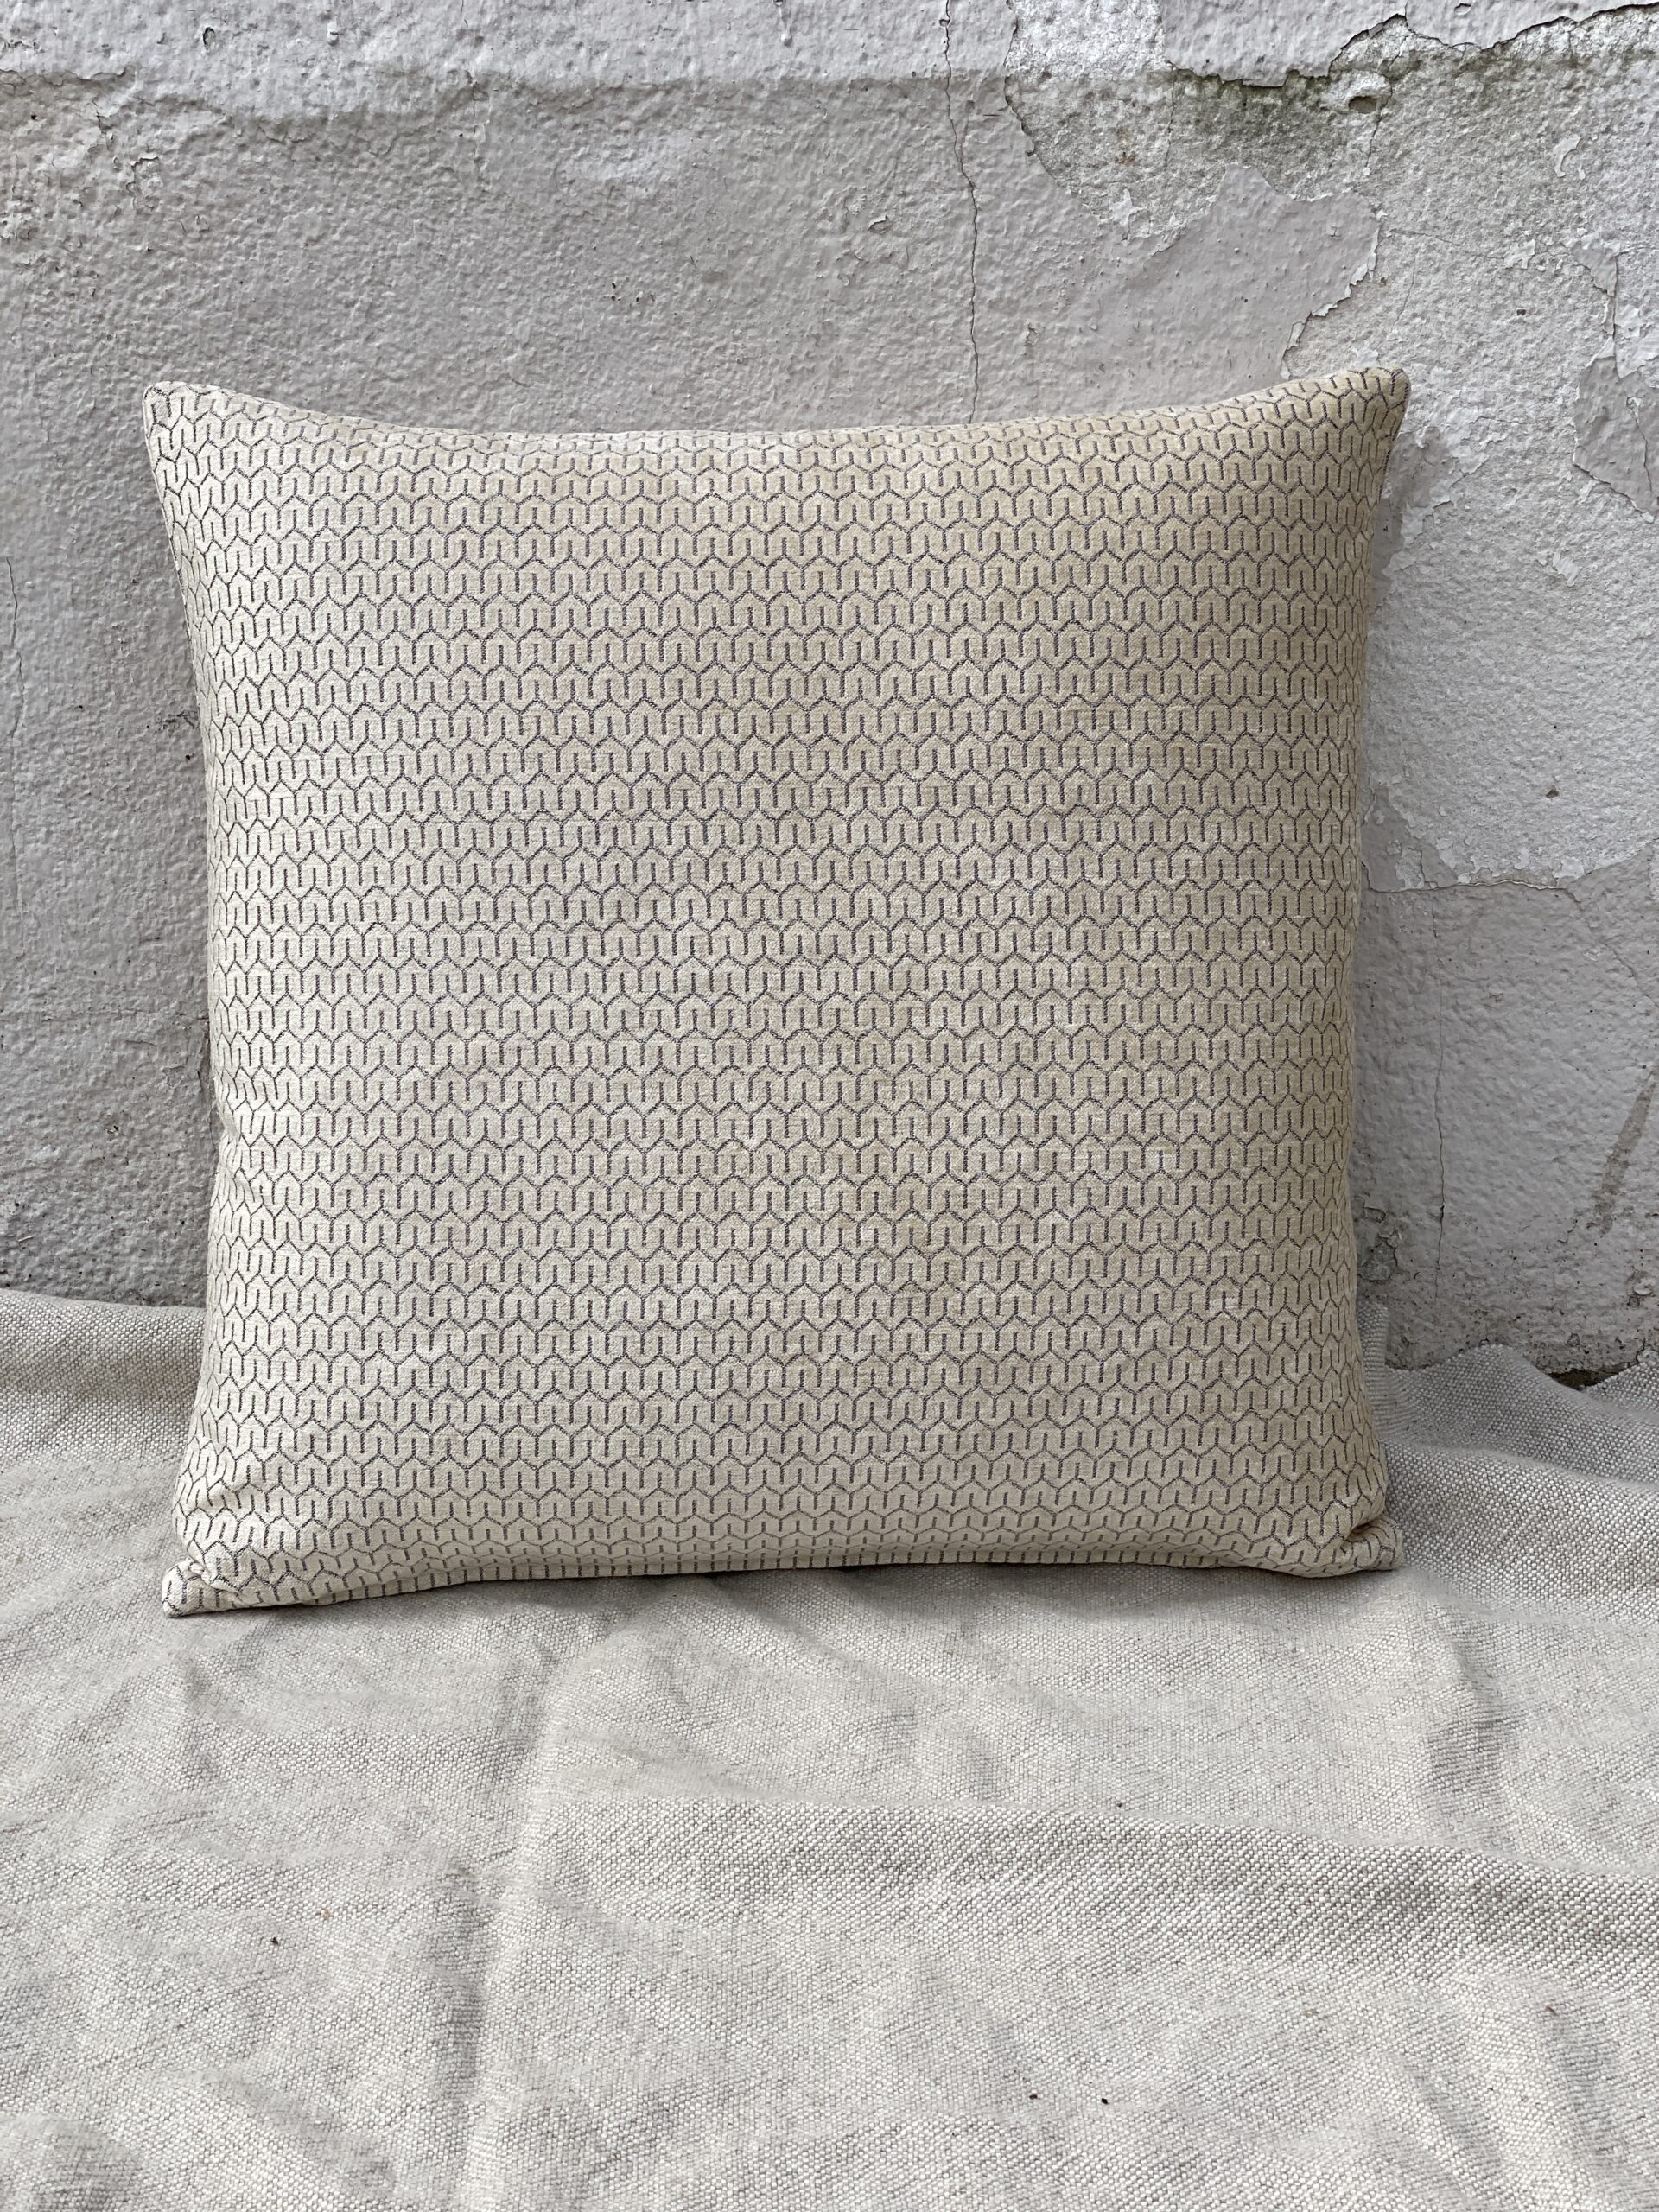 TOBE Design x Mitchell Fabrics Pillows